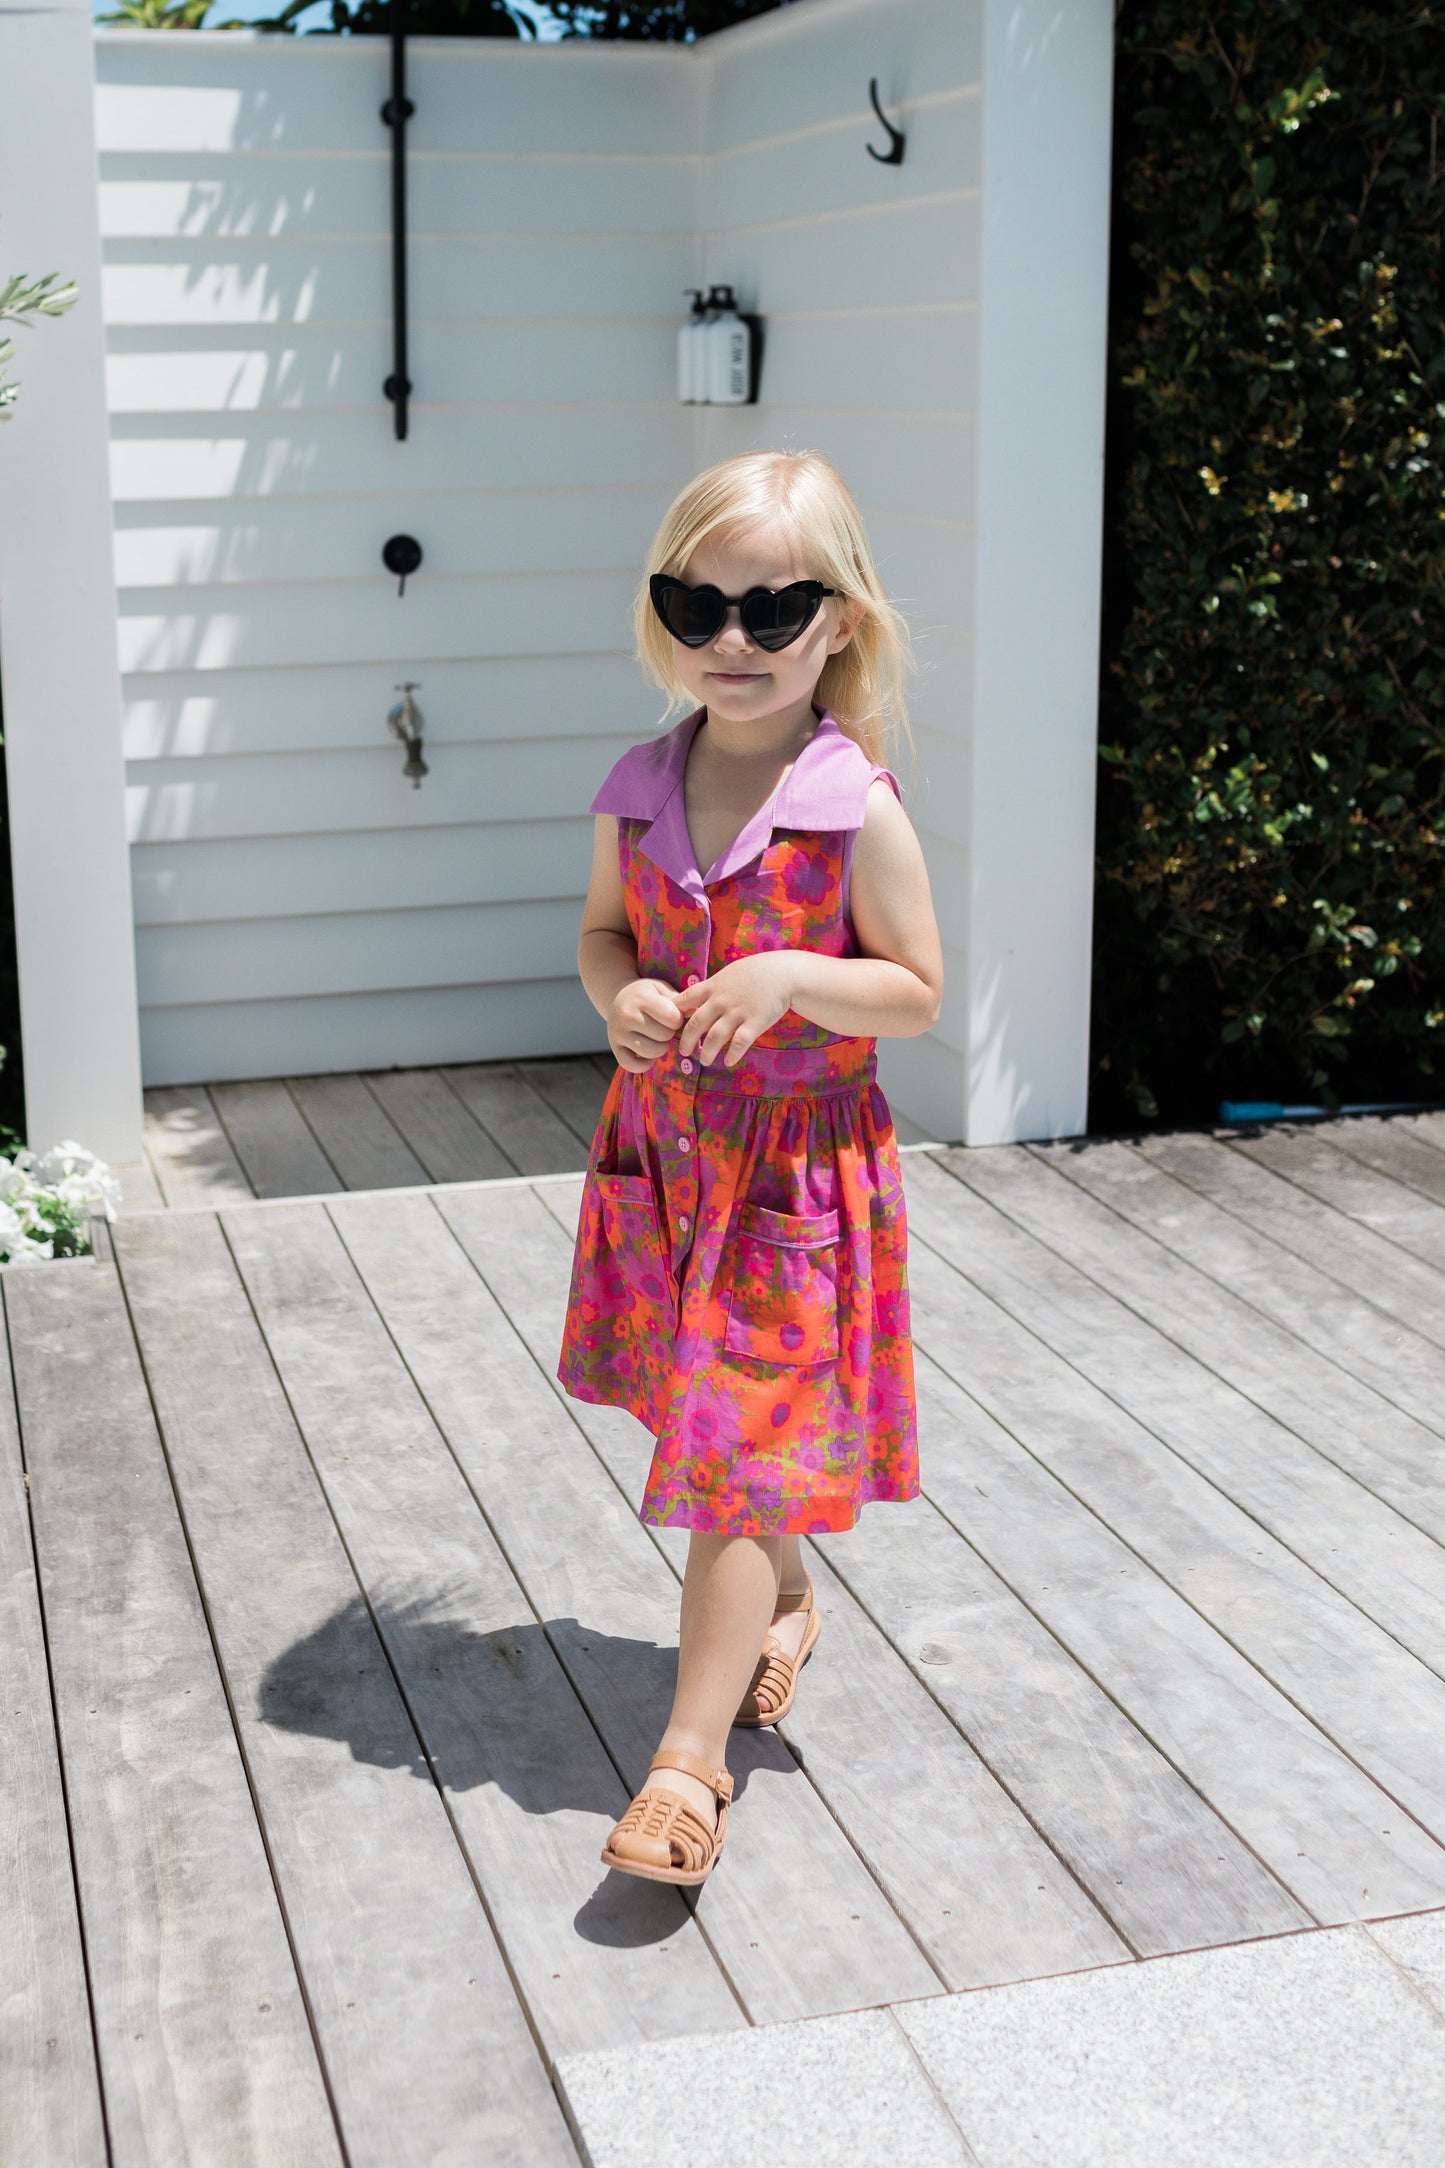 6 year old girls black love heart sunglasses